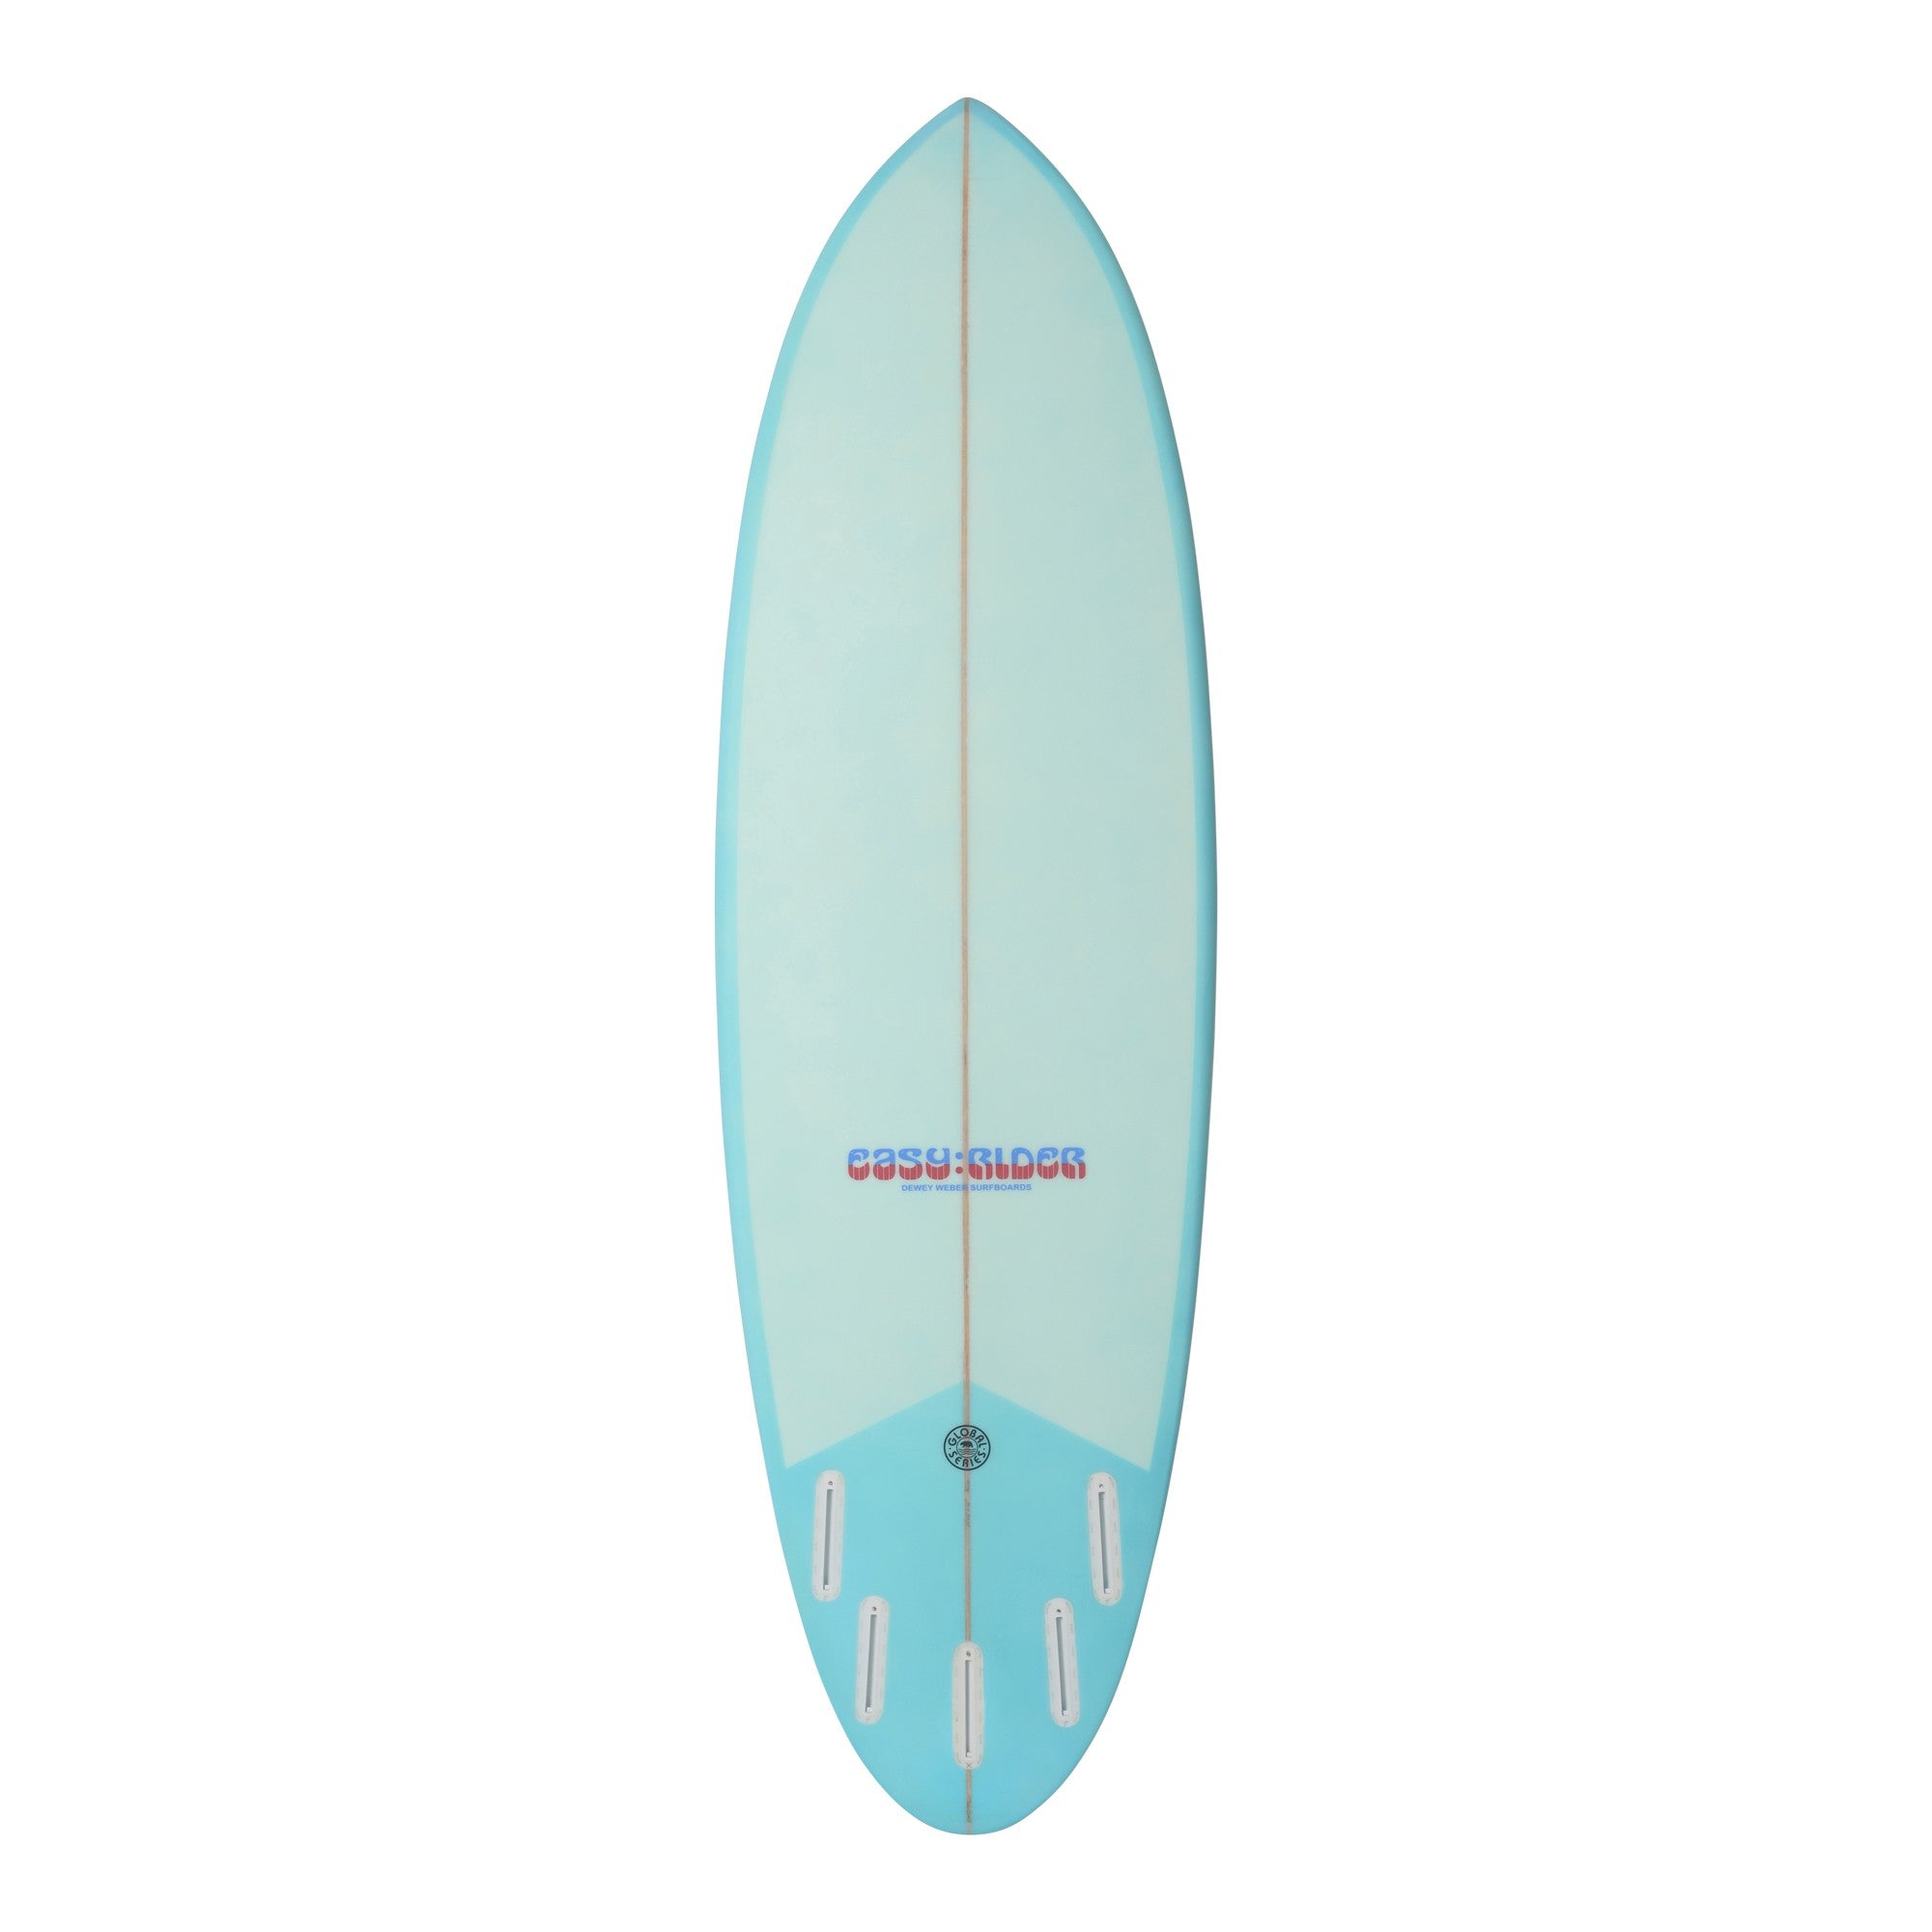 WEBER SURFBOARDS - Easy Rider 6'3 - Blue